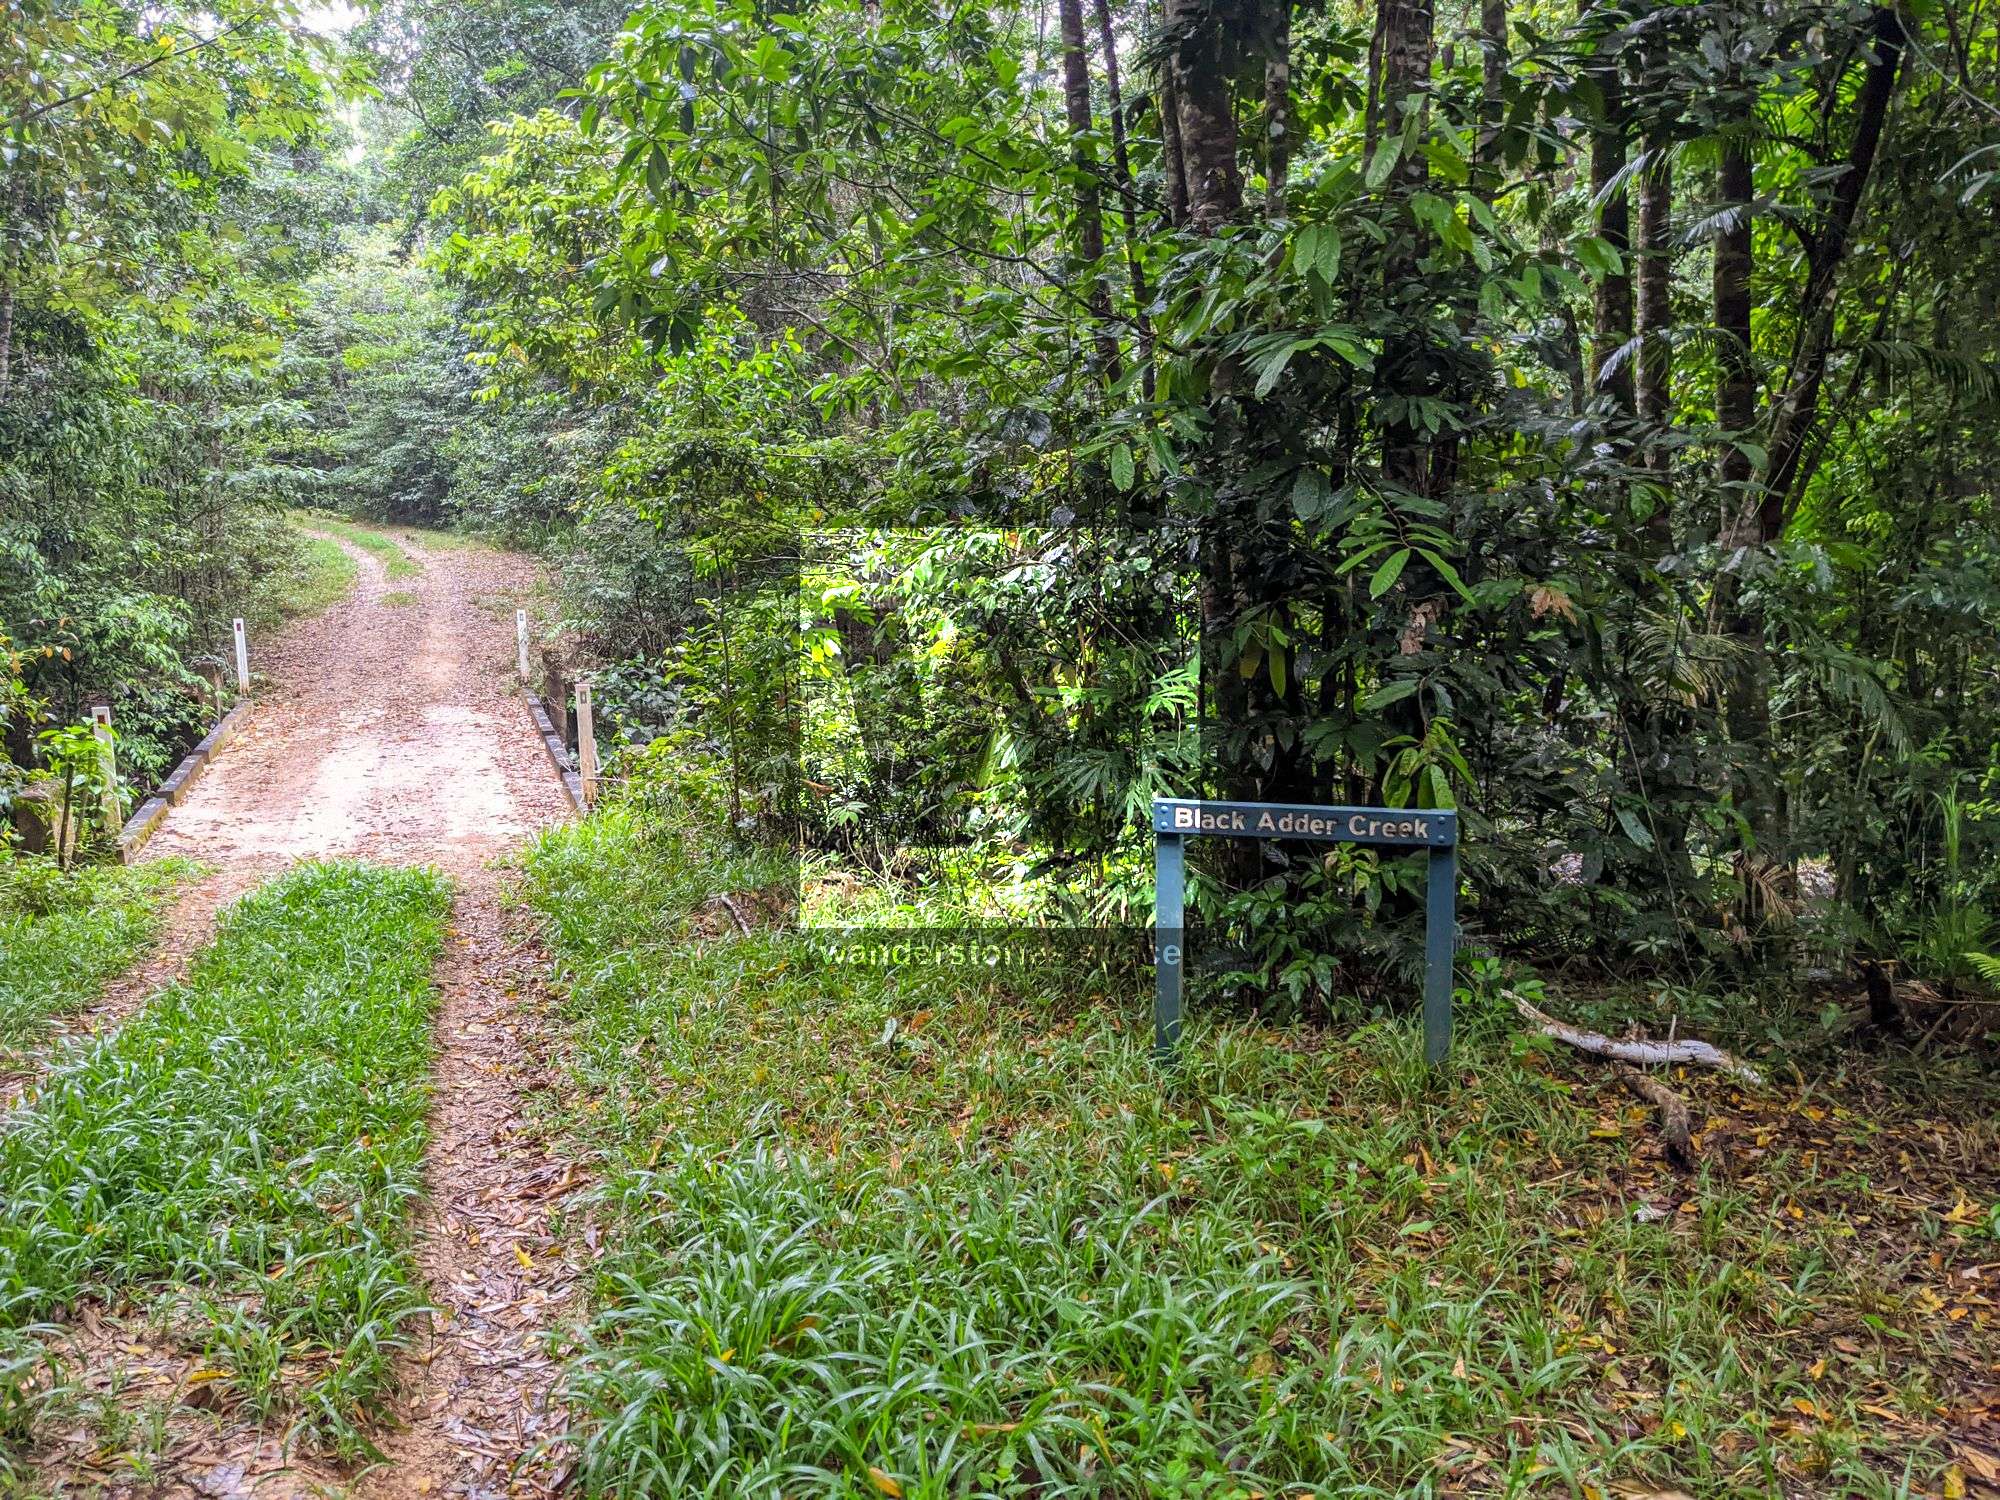 black adder creek sign girringun